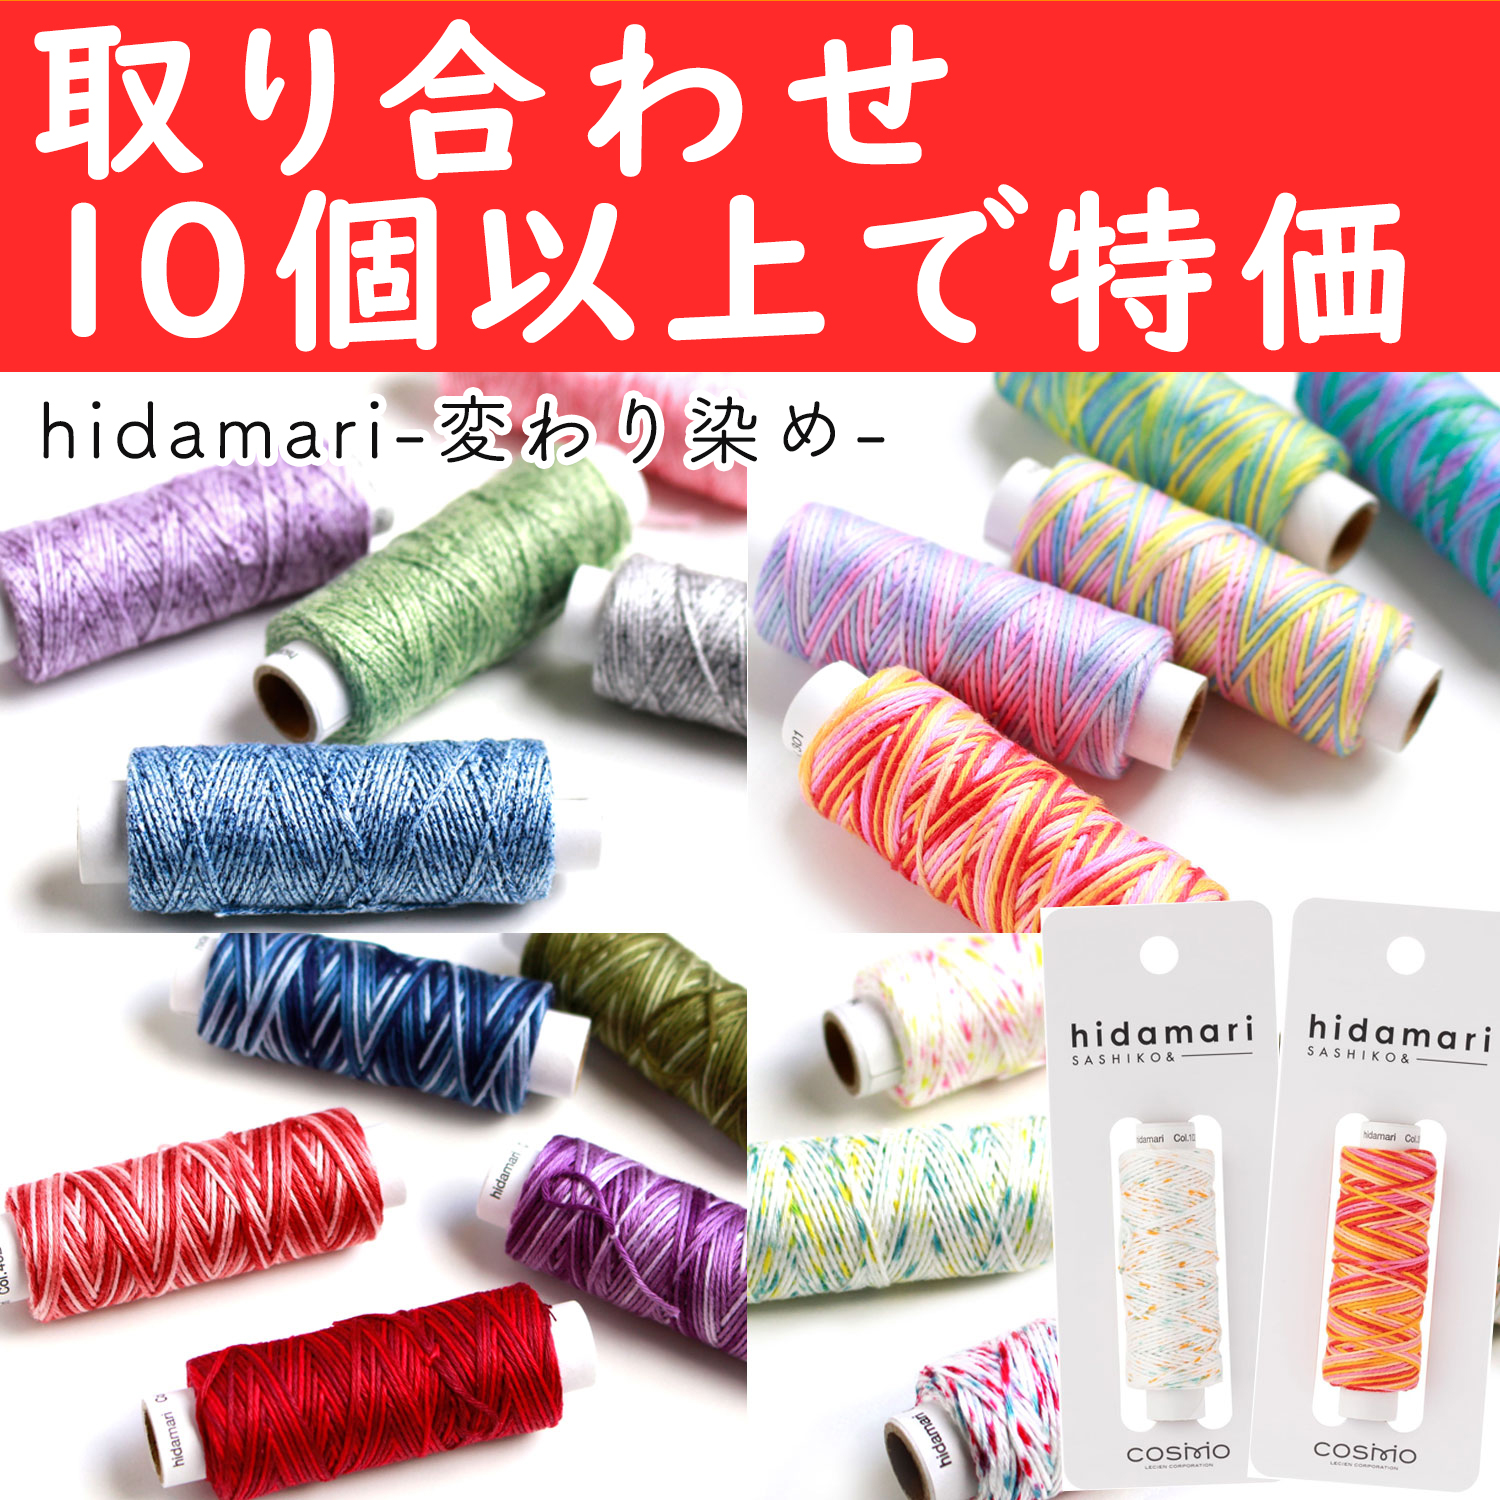 【renewal】CS122302-OVER10 Cosmo Sashiko Thread - hidamari - for 10 or more pcs of any colors (pcs)